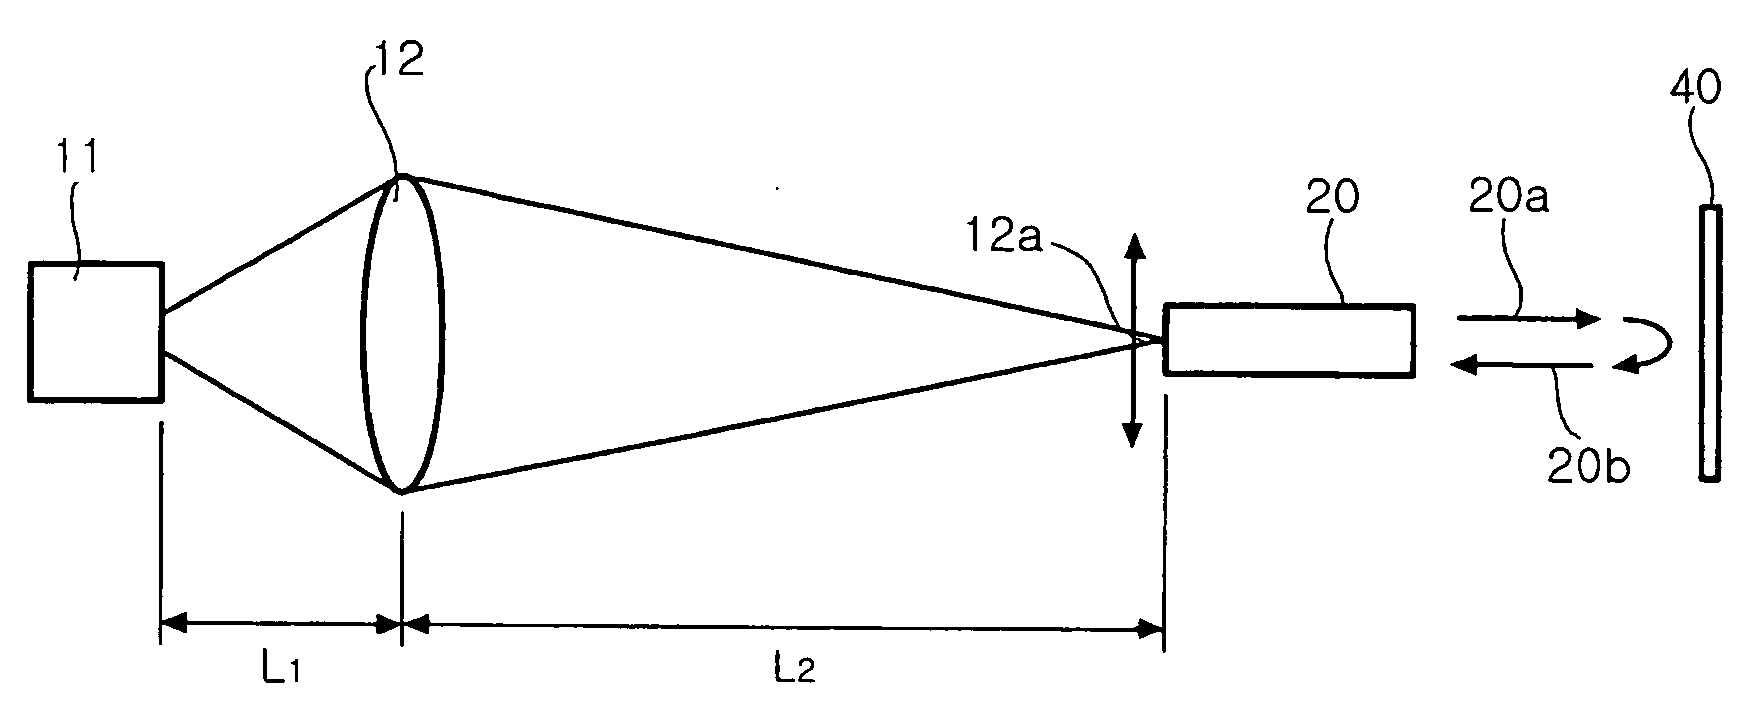 Optical alignment method and apparatus